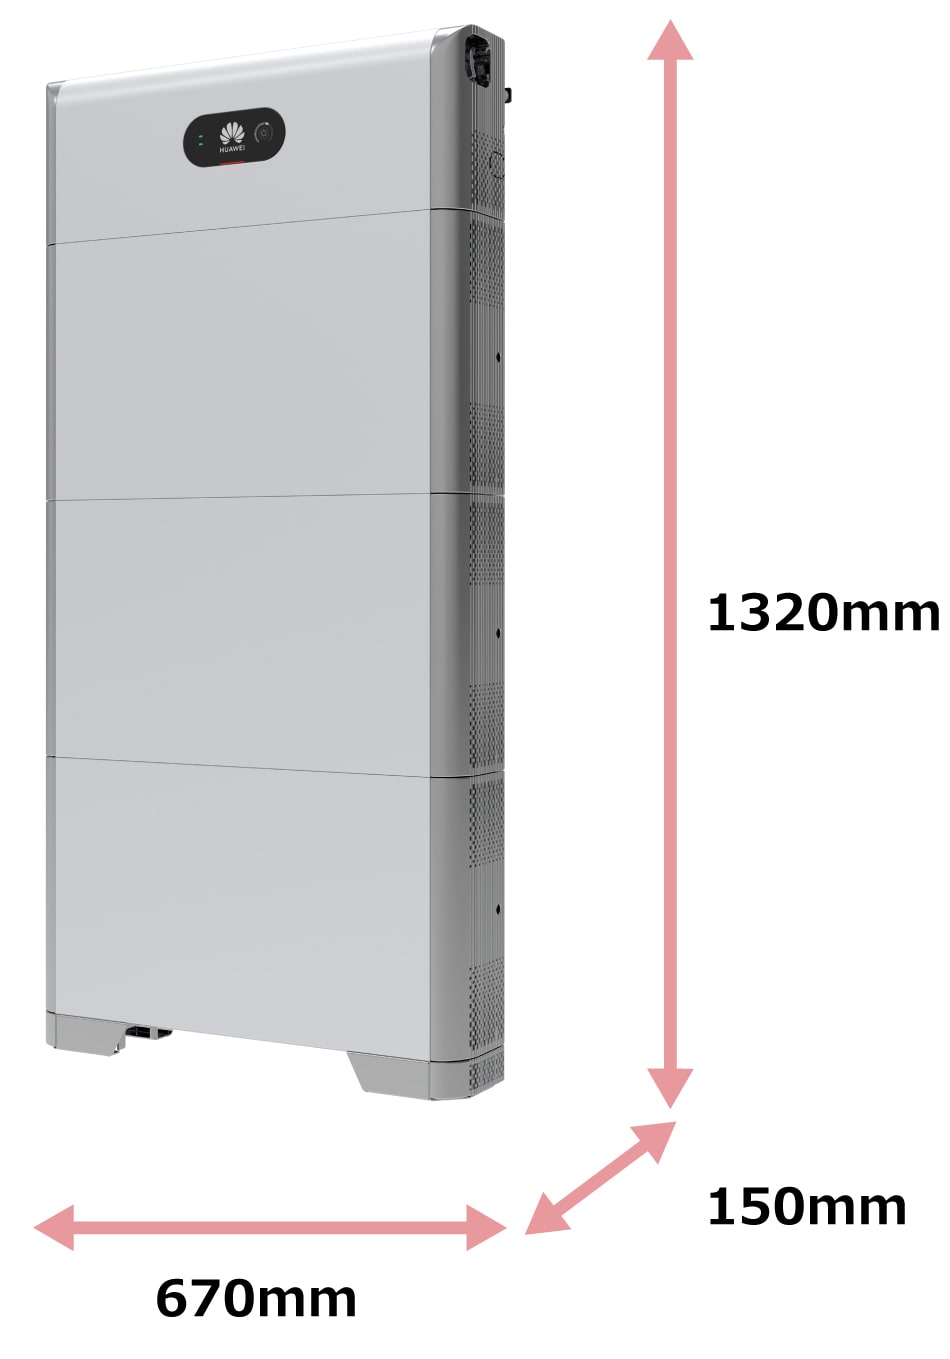 HUAWEIの蓄電池は、この容量で業界最軽量のコンパクト設計